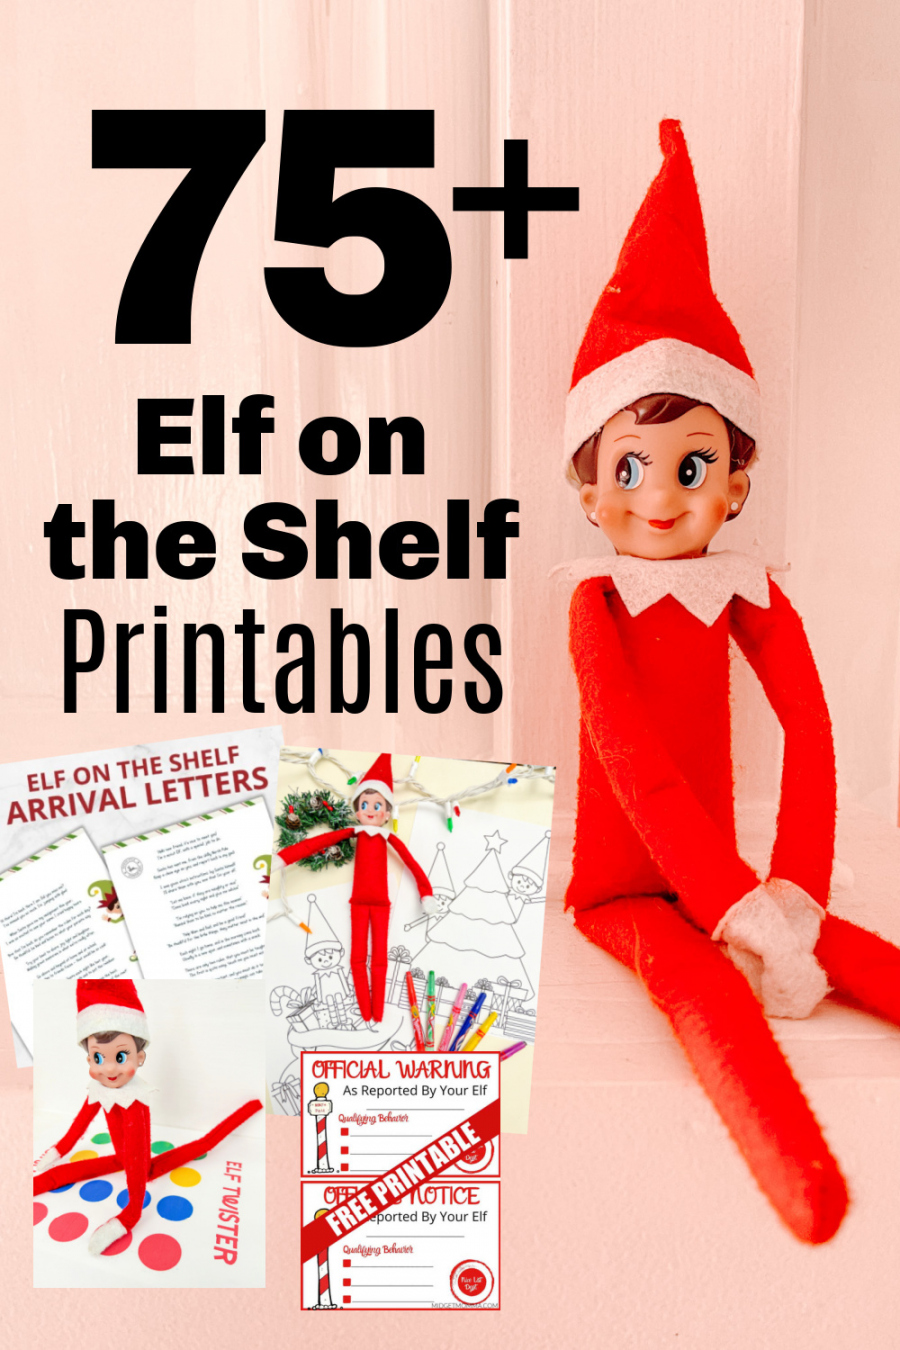 Free Elf On The Shelf Printables - Printable - Ultimate List of FREE Elf on the Shelf Printables - Over